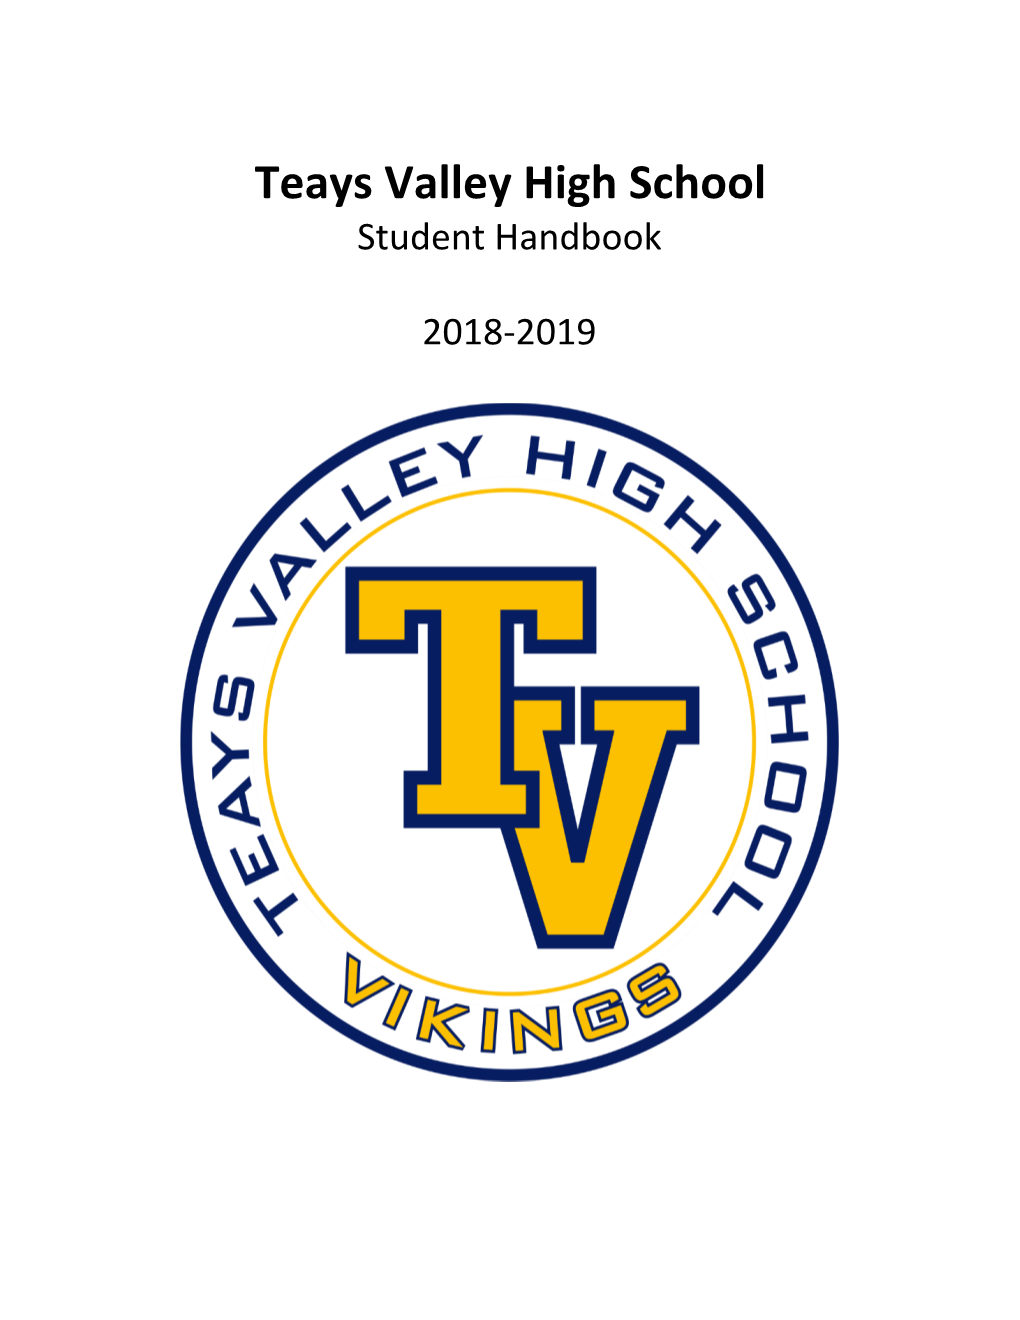 Teays Valley High School Student Handbook